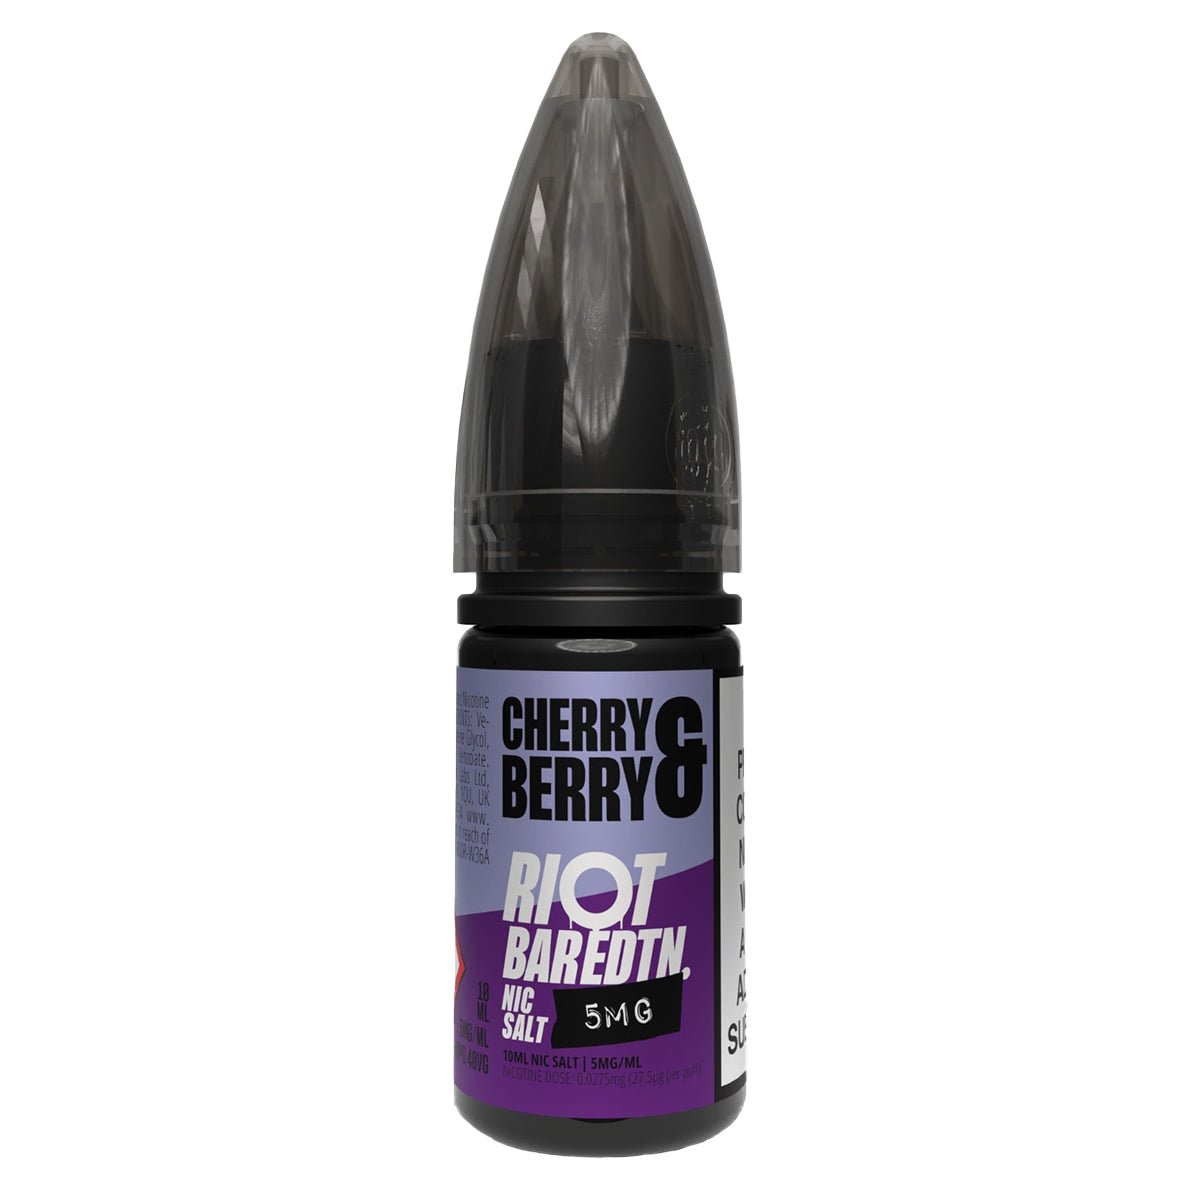 Cherry & Berry BAR EDTN 10ml Nic Salt By Riot Squad - Prime Vapes UK